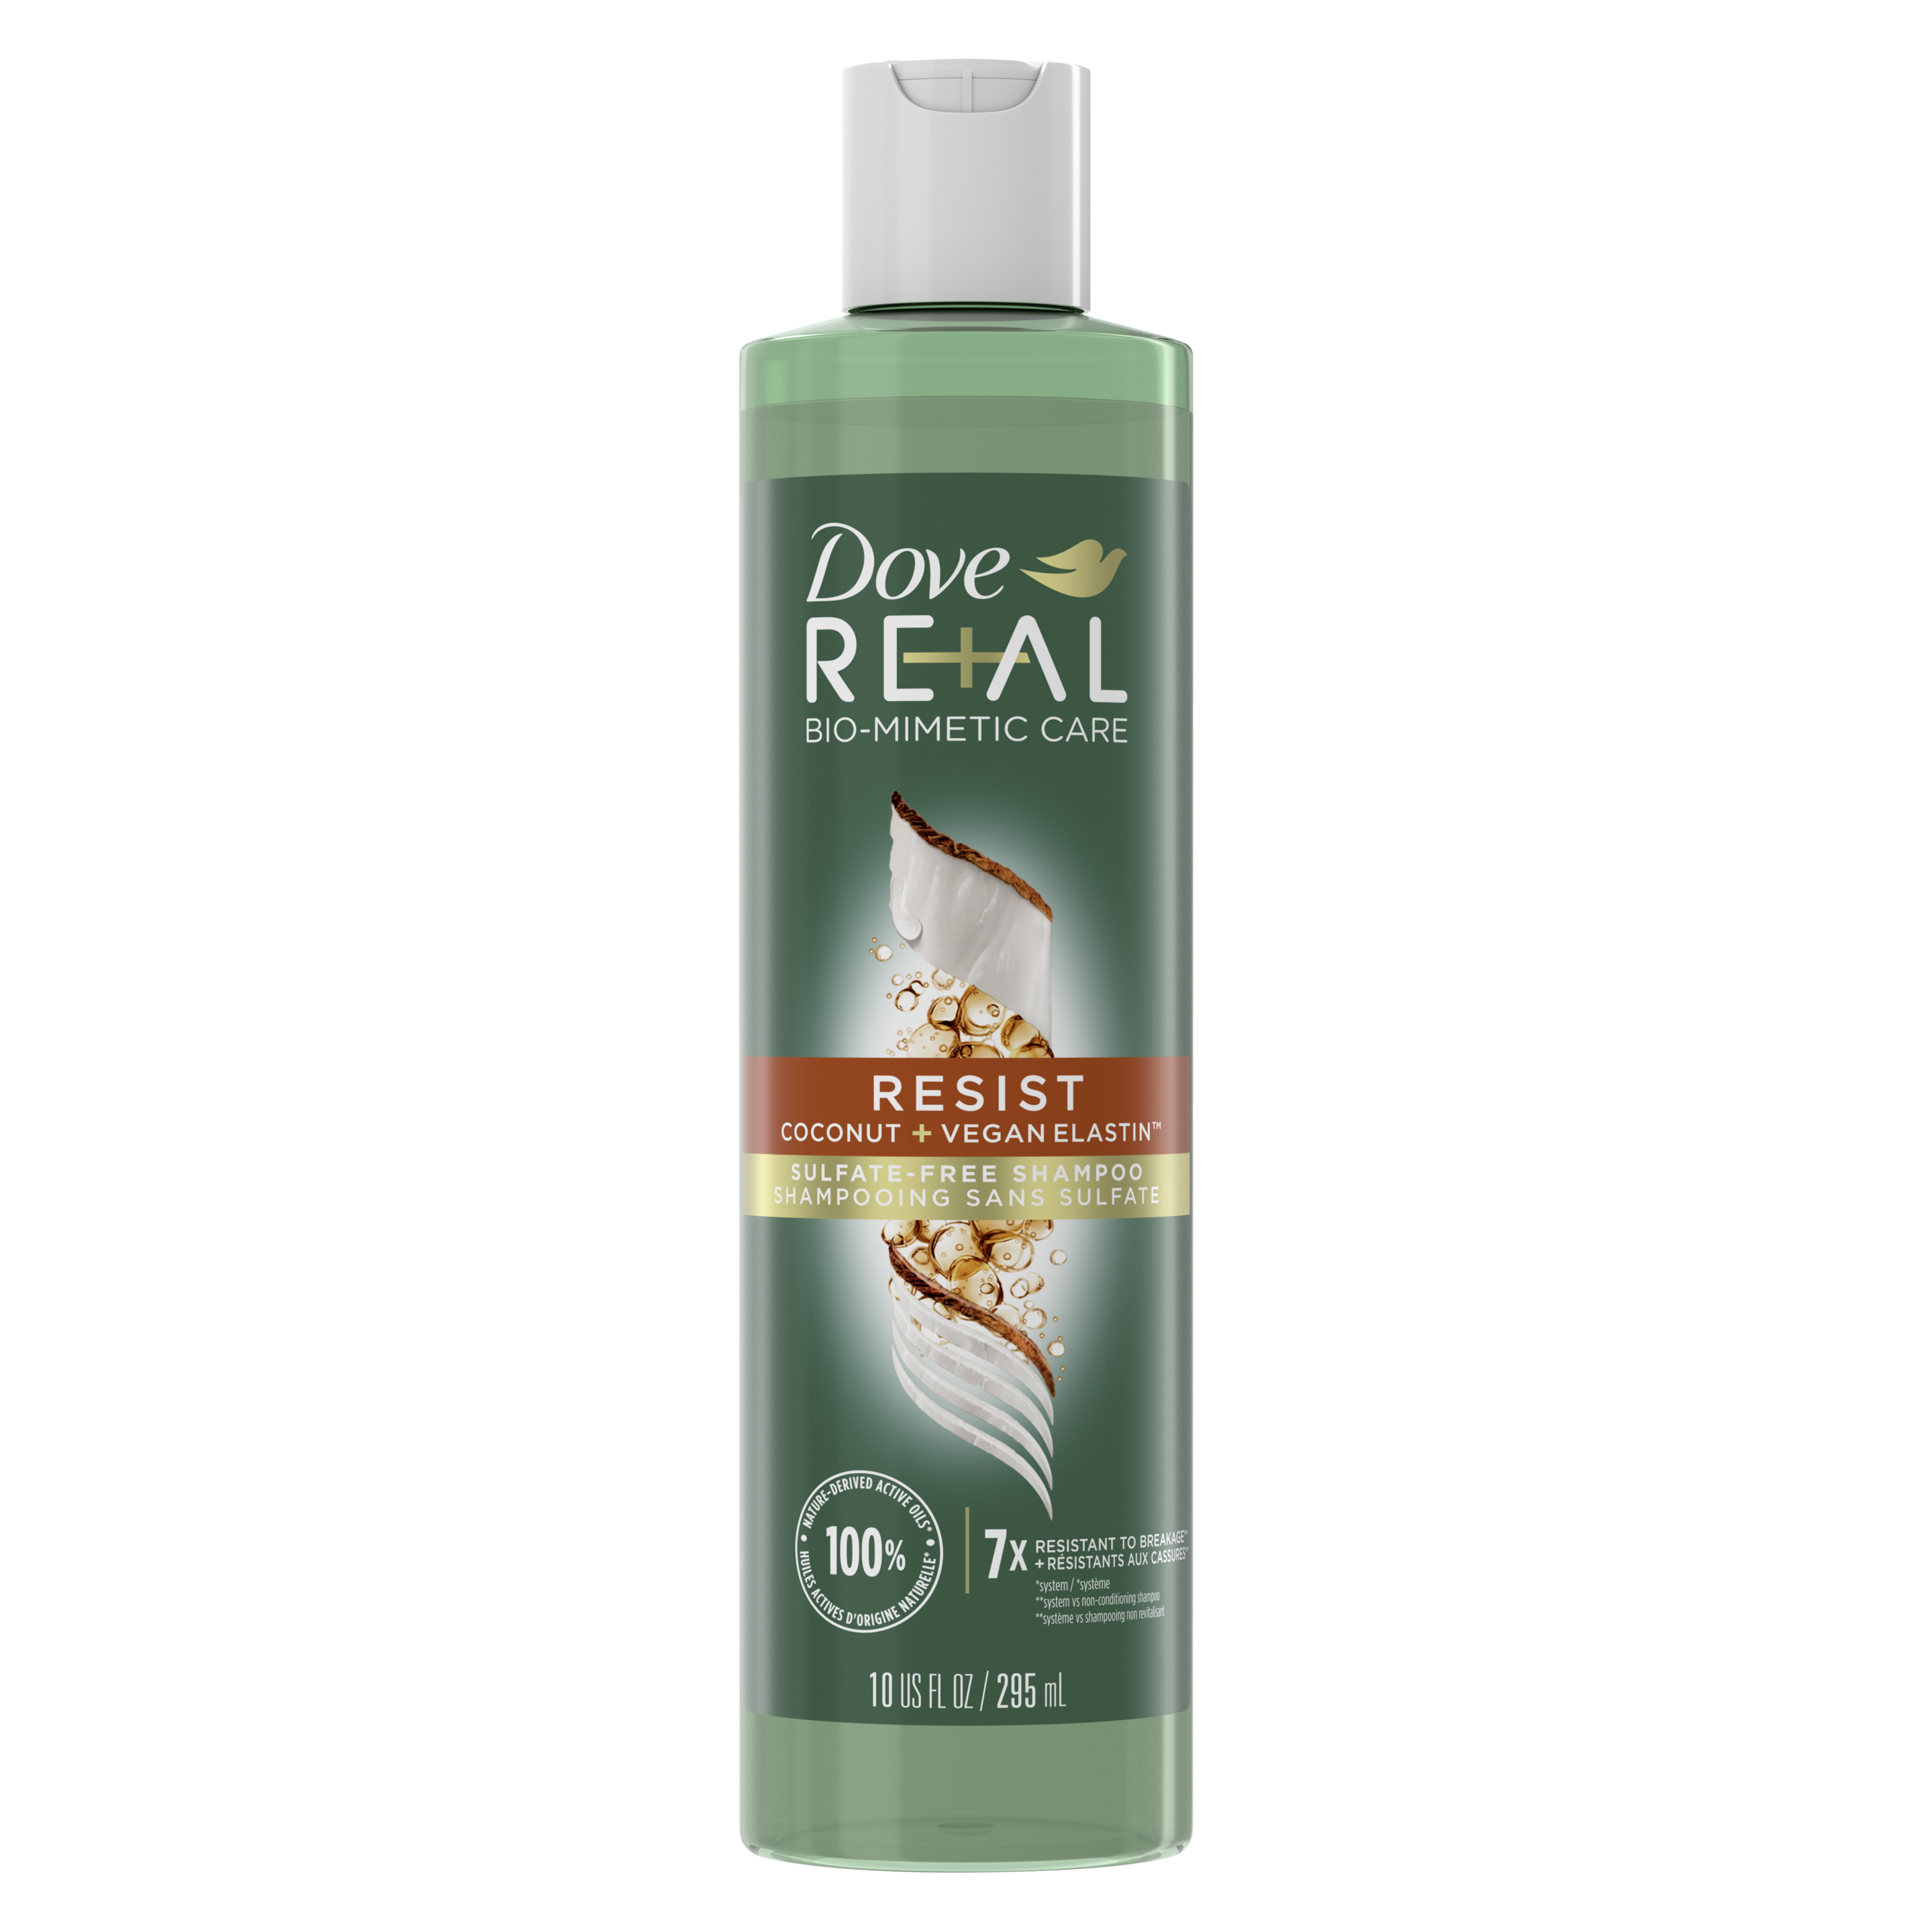 høj gå på indkøb Tidsserier RE+AL Bio-Mimetic Resist Coconut + Vegan Elastin Sulfate-Free Shampoo | Dove